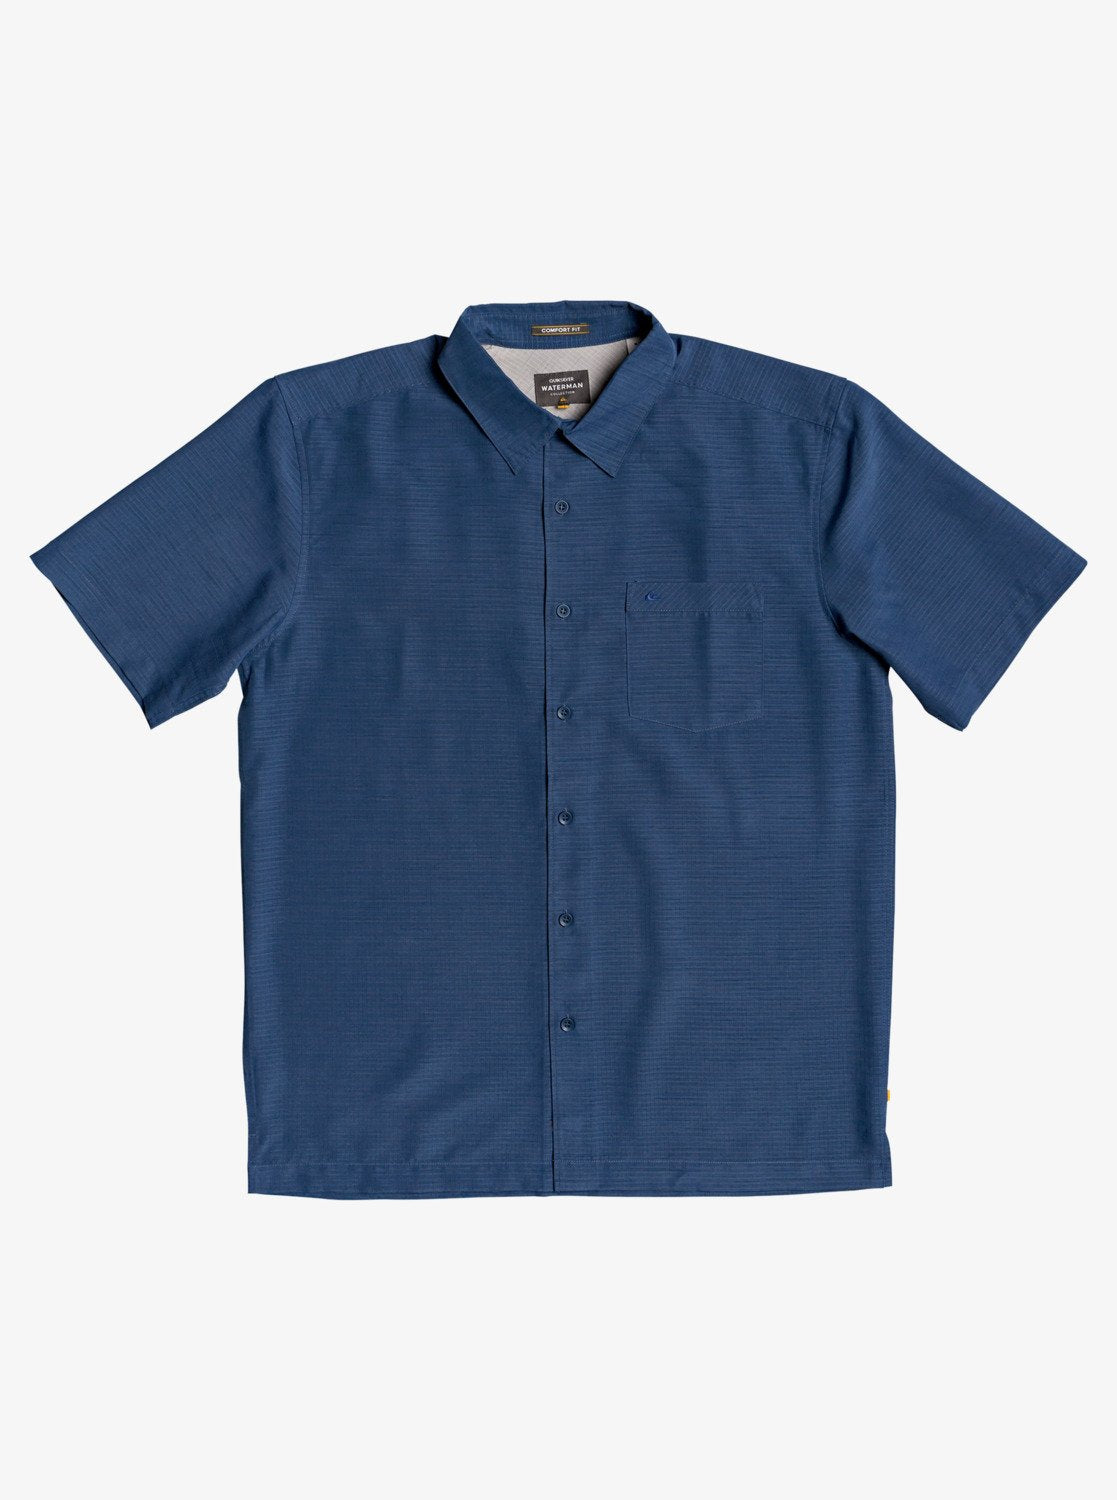 Waterman Centinela Premium Anti-Wrinkle Shirt - Midnight Navy Centinella